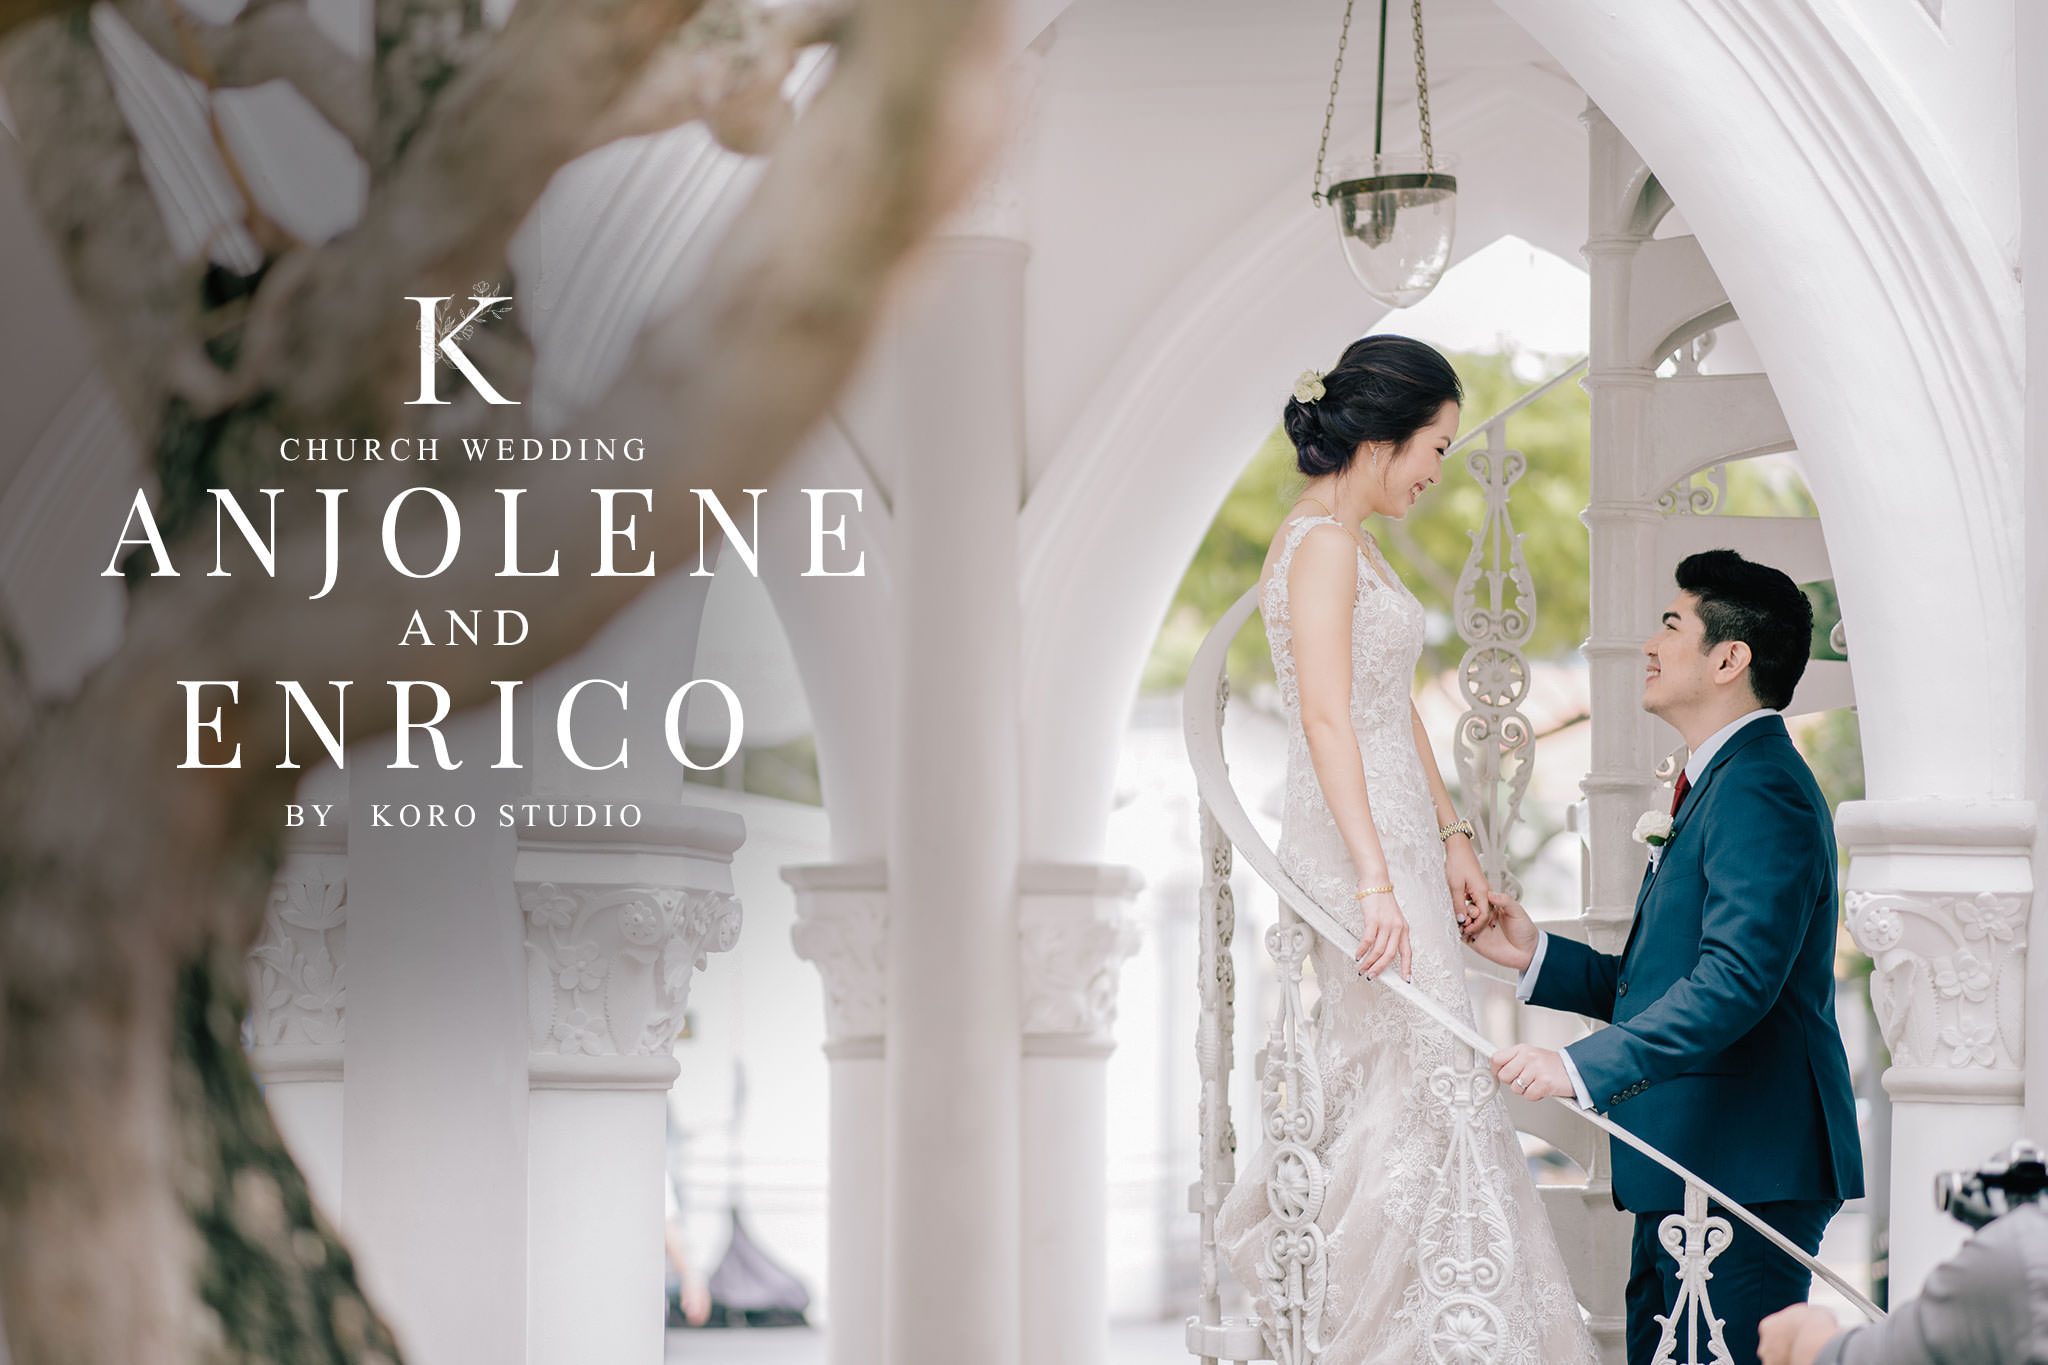 singapore wedding photographer koro studio cover 1 CHIJMES Wedding Hall - Church Wedding in Singapore of Anjolene and Enrico